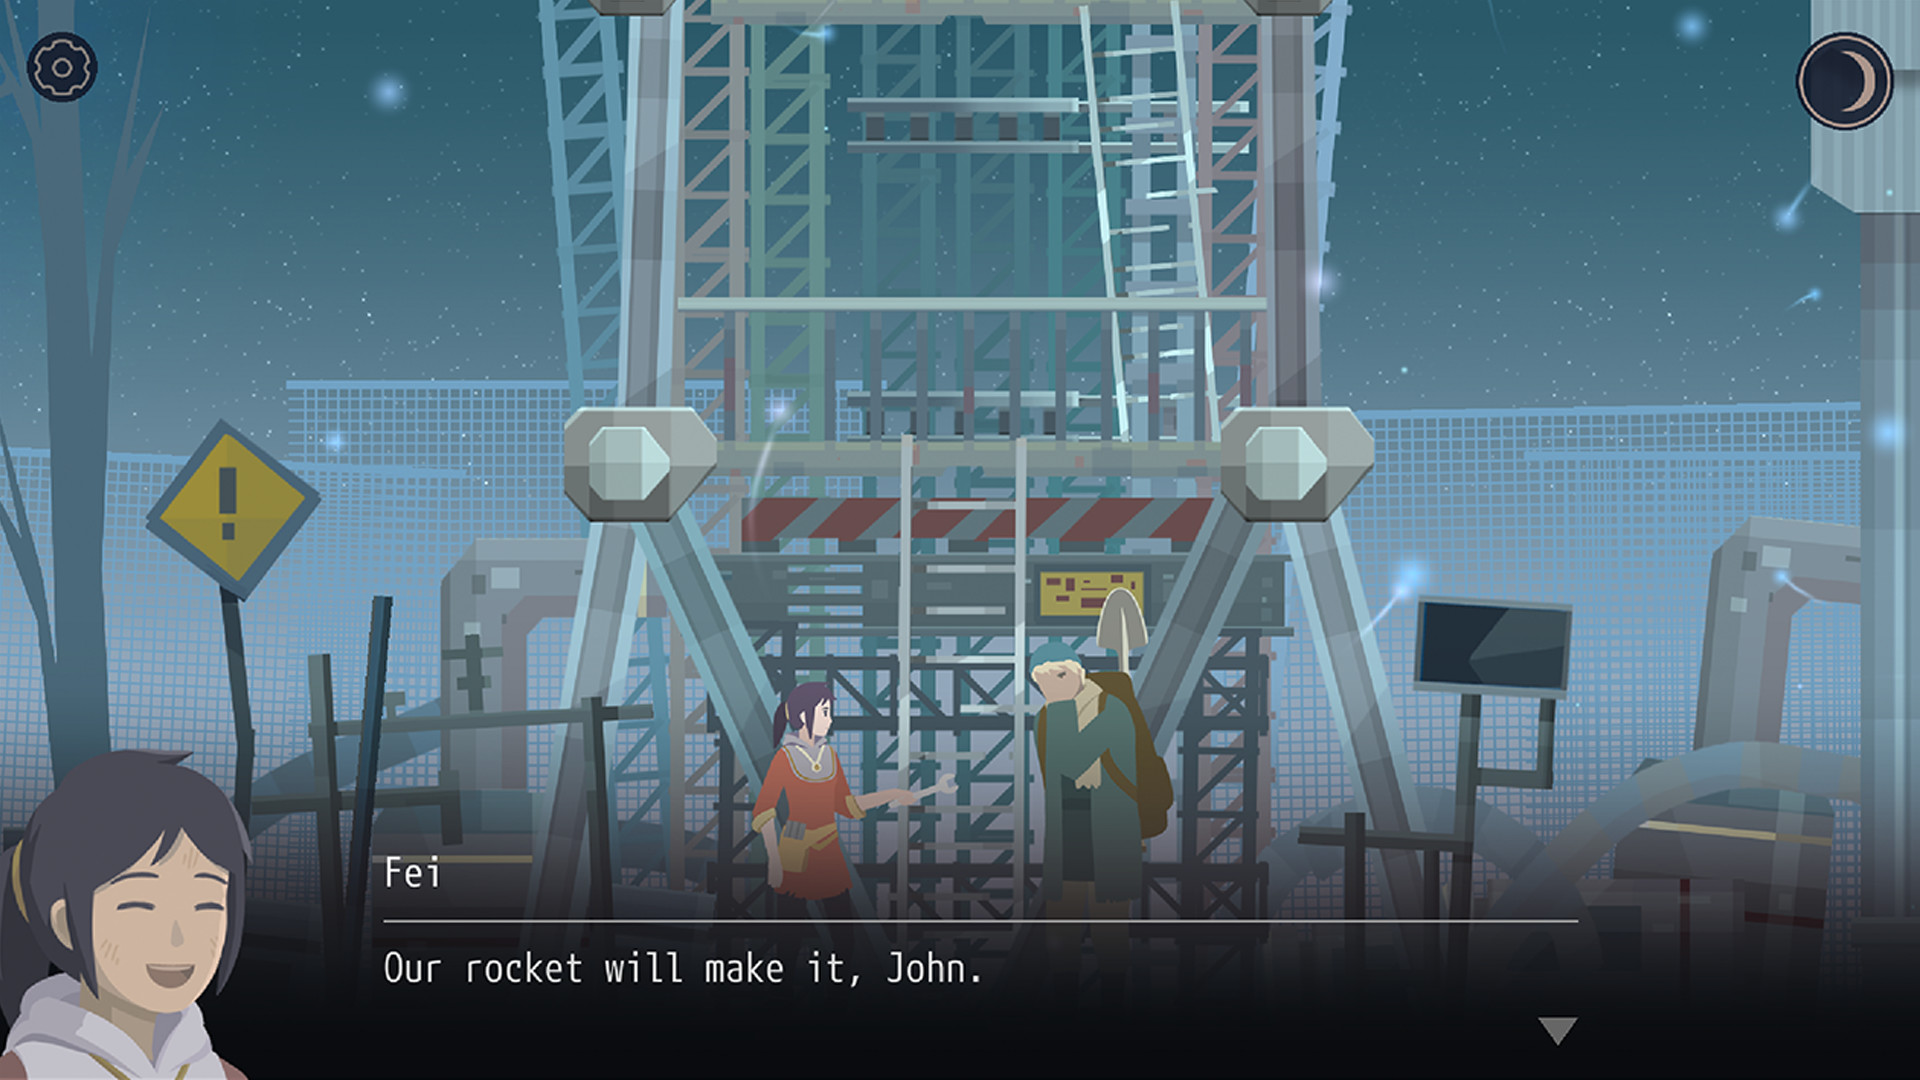 OPUS: Rocket of Whispers screenshot